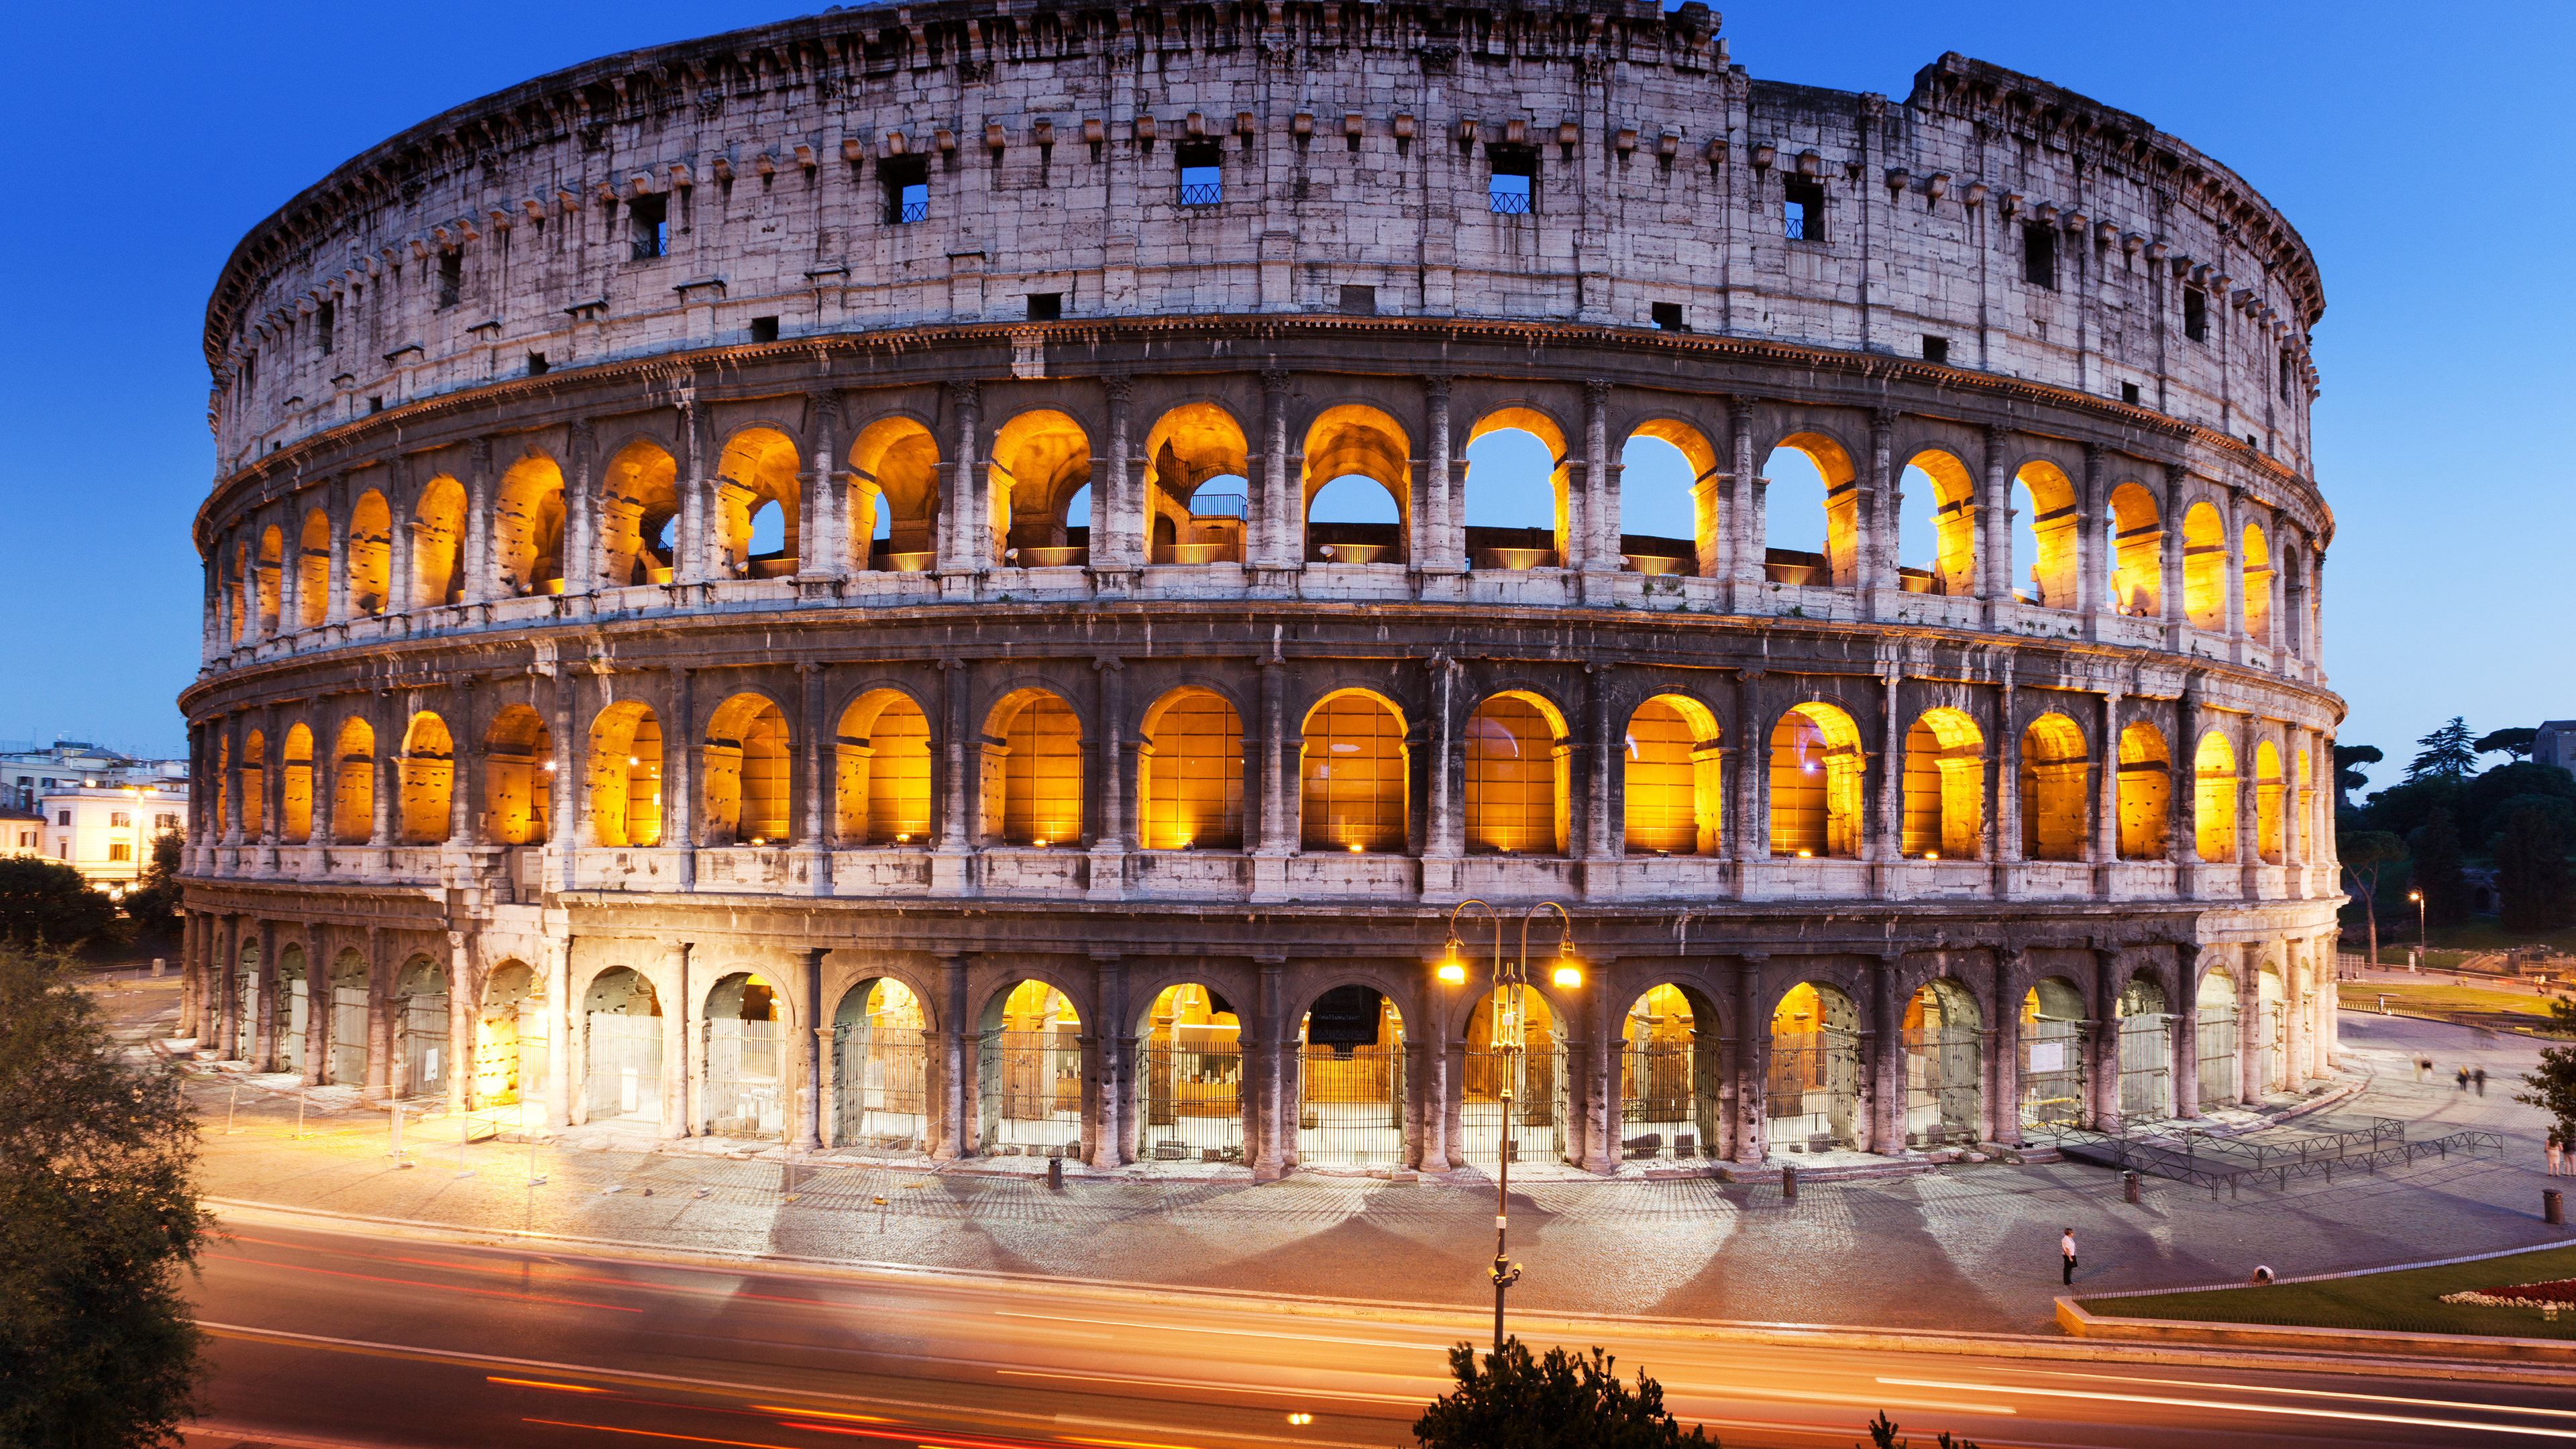 Colosseum In Rome 4k Ultra HD Wallpaper